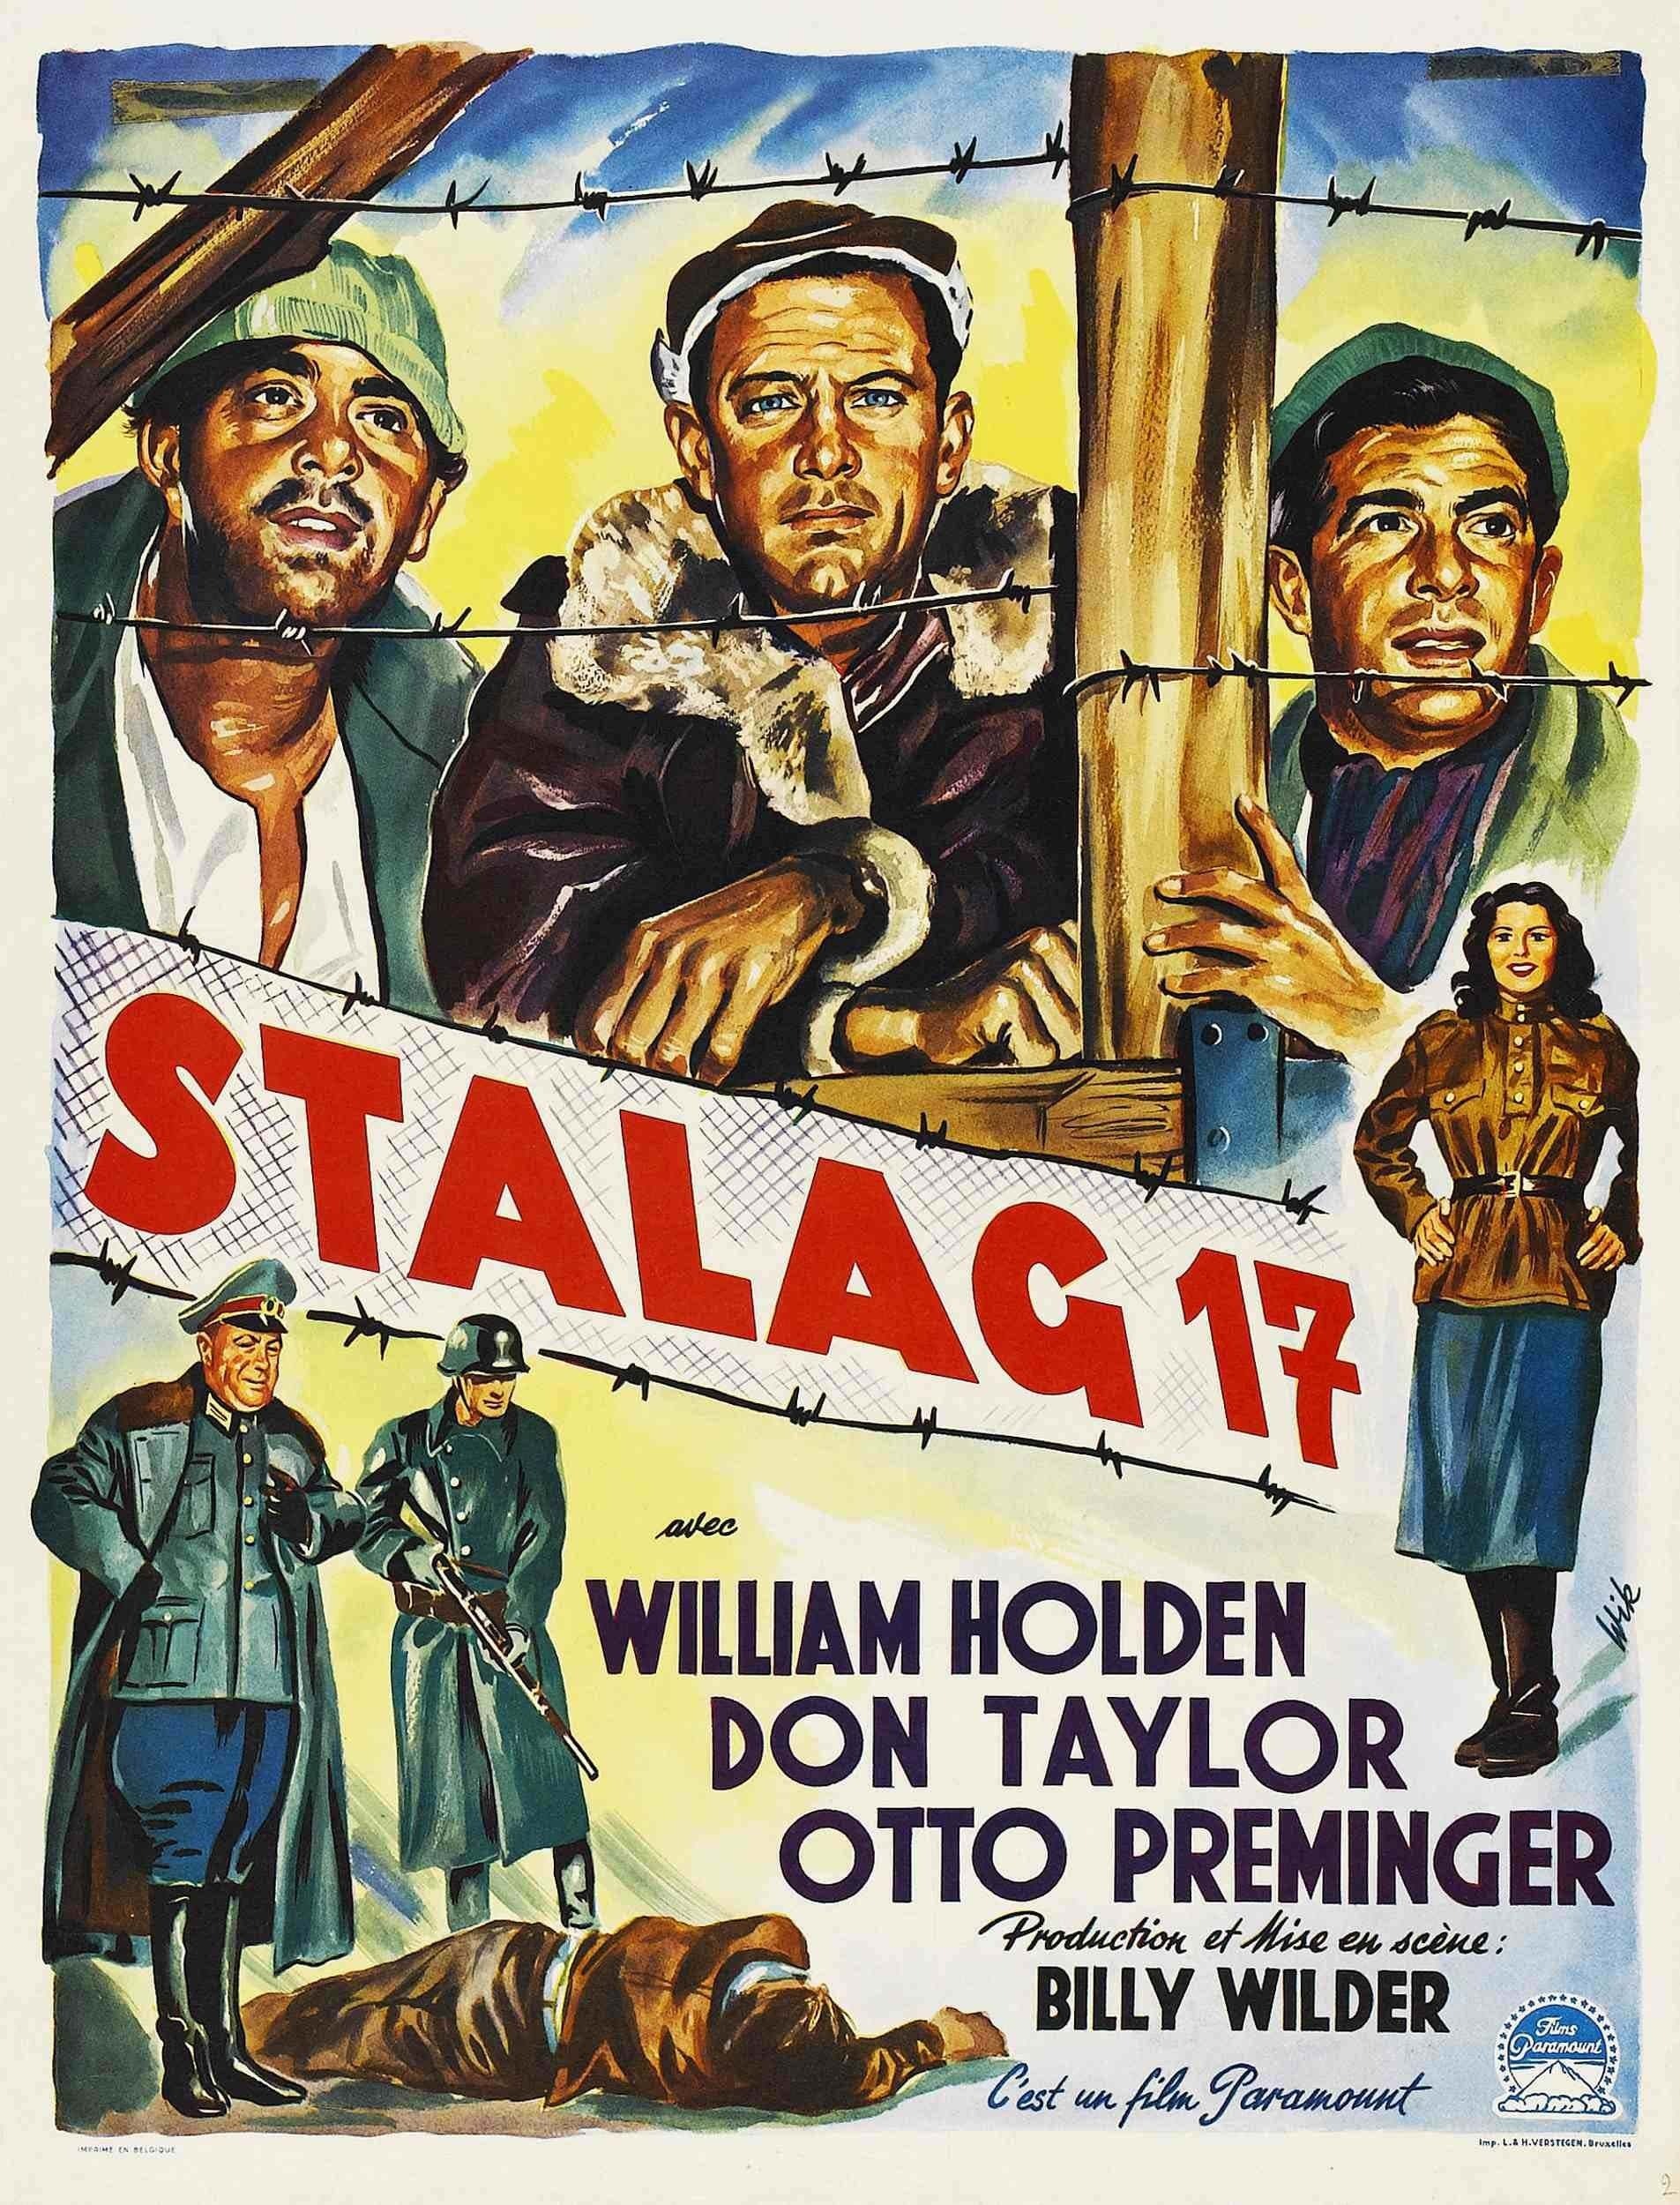 Mega Sized Movie Poster Image for Stalag 17 (#4 of 4)